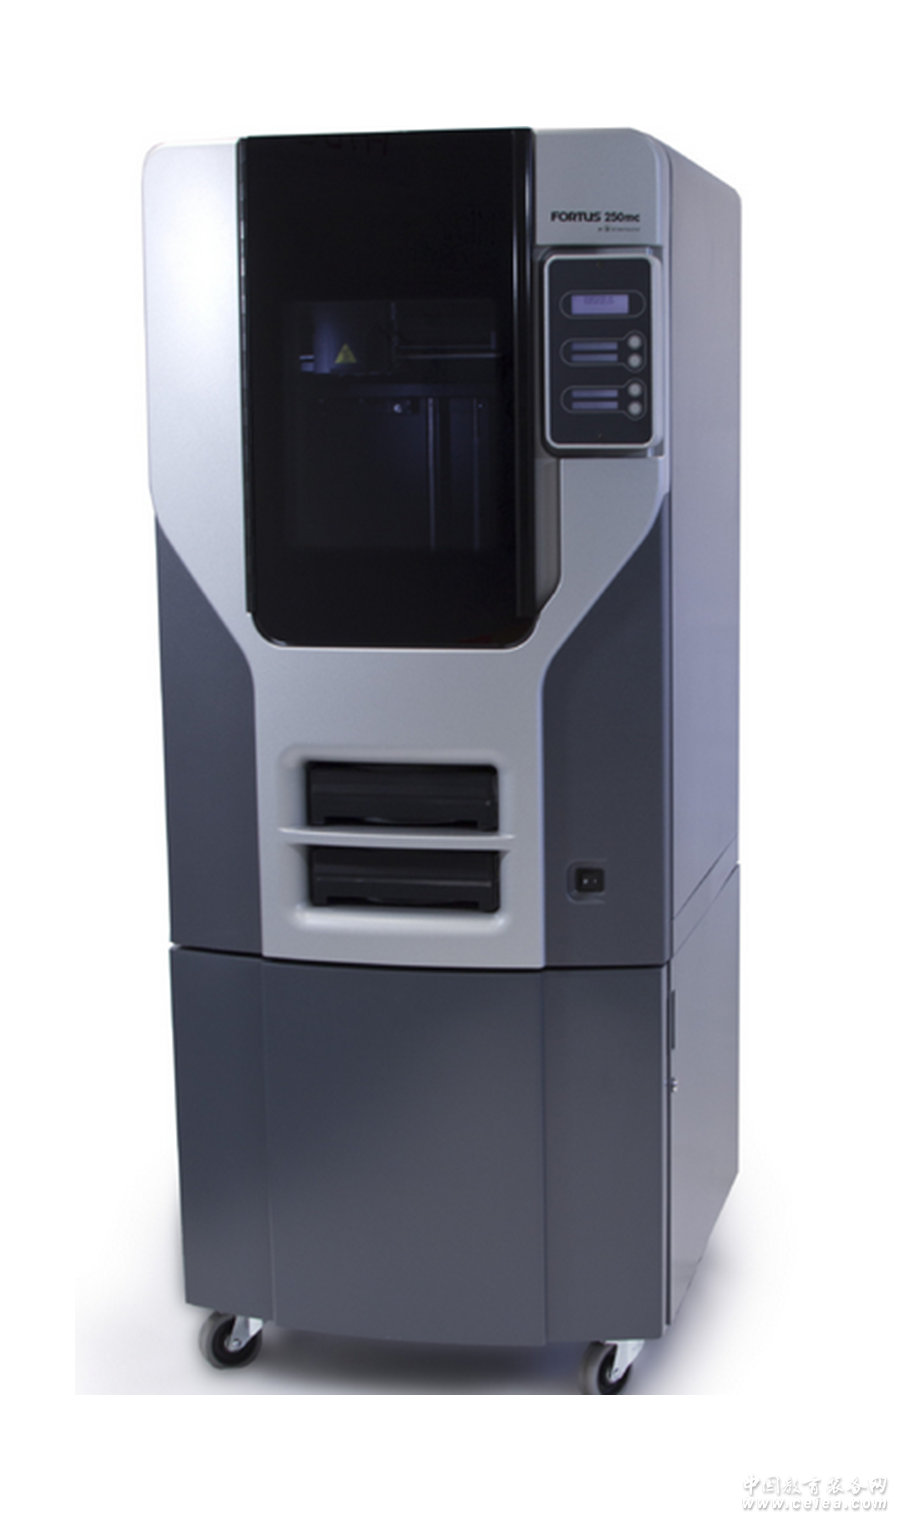 Fortus250mc 3D打印机